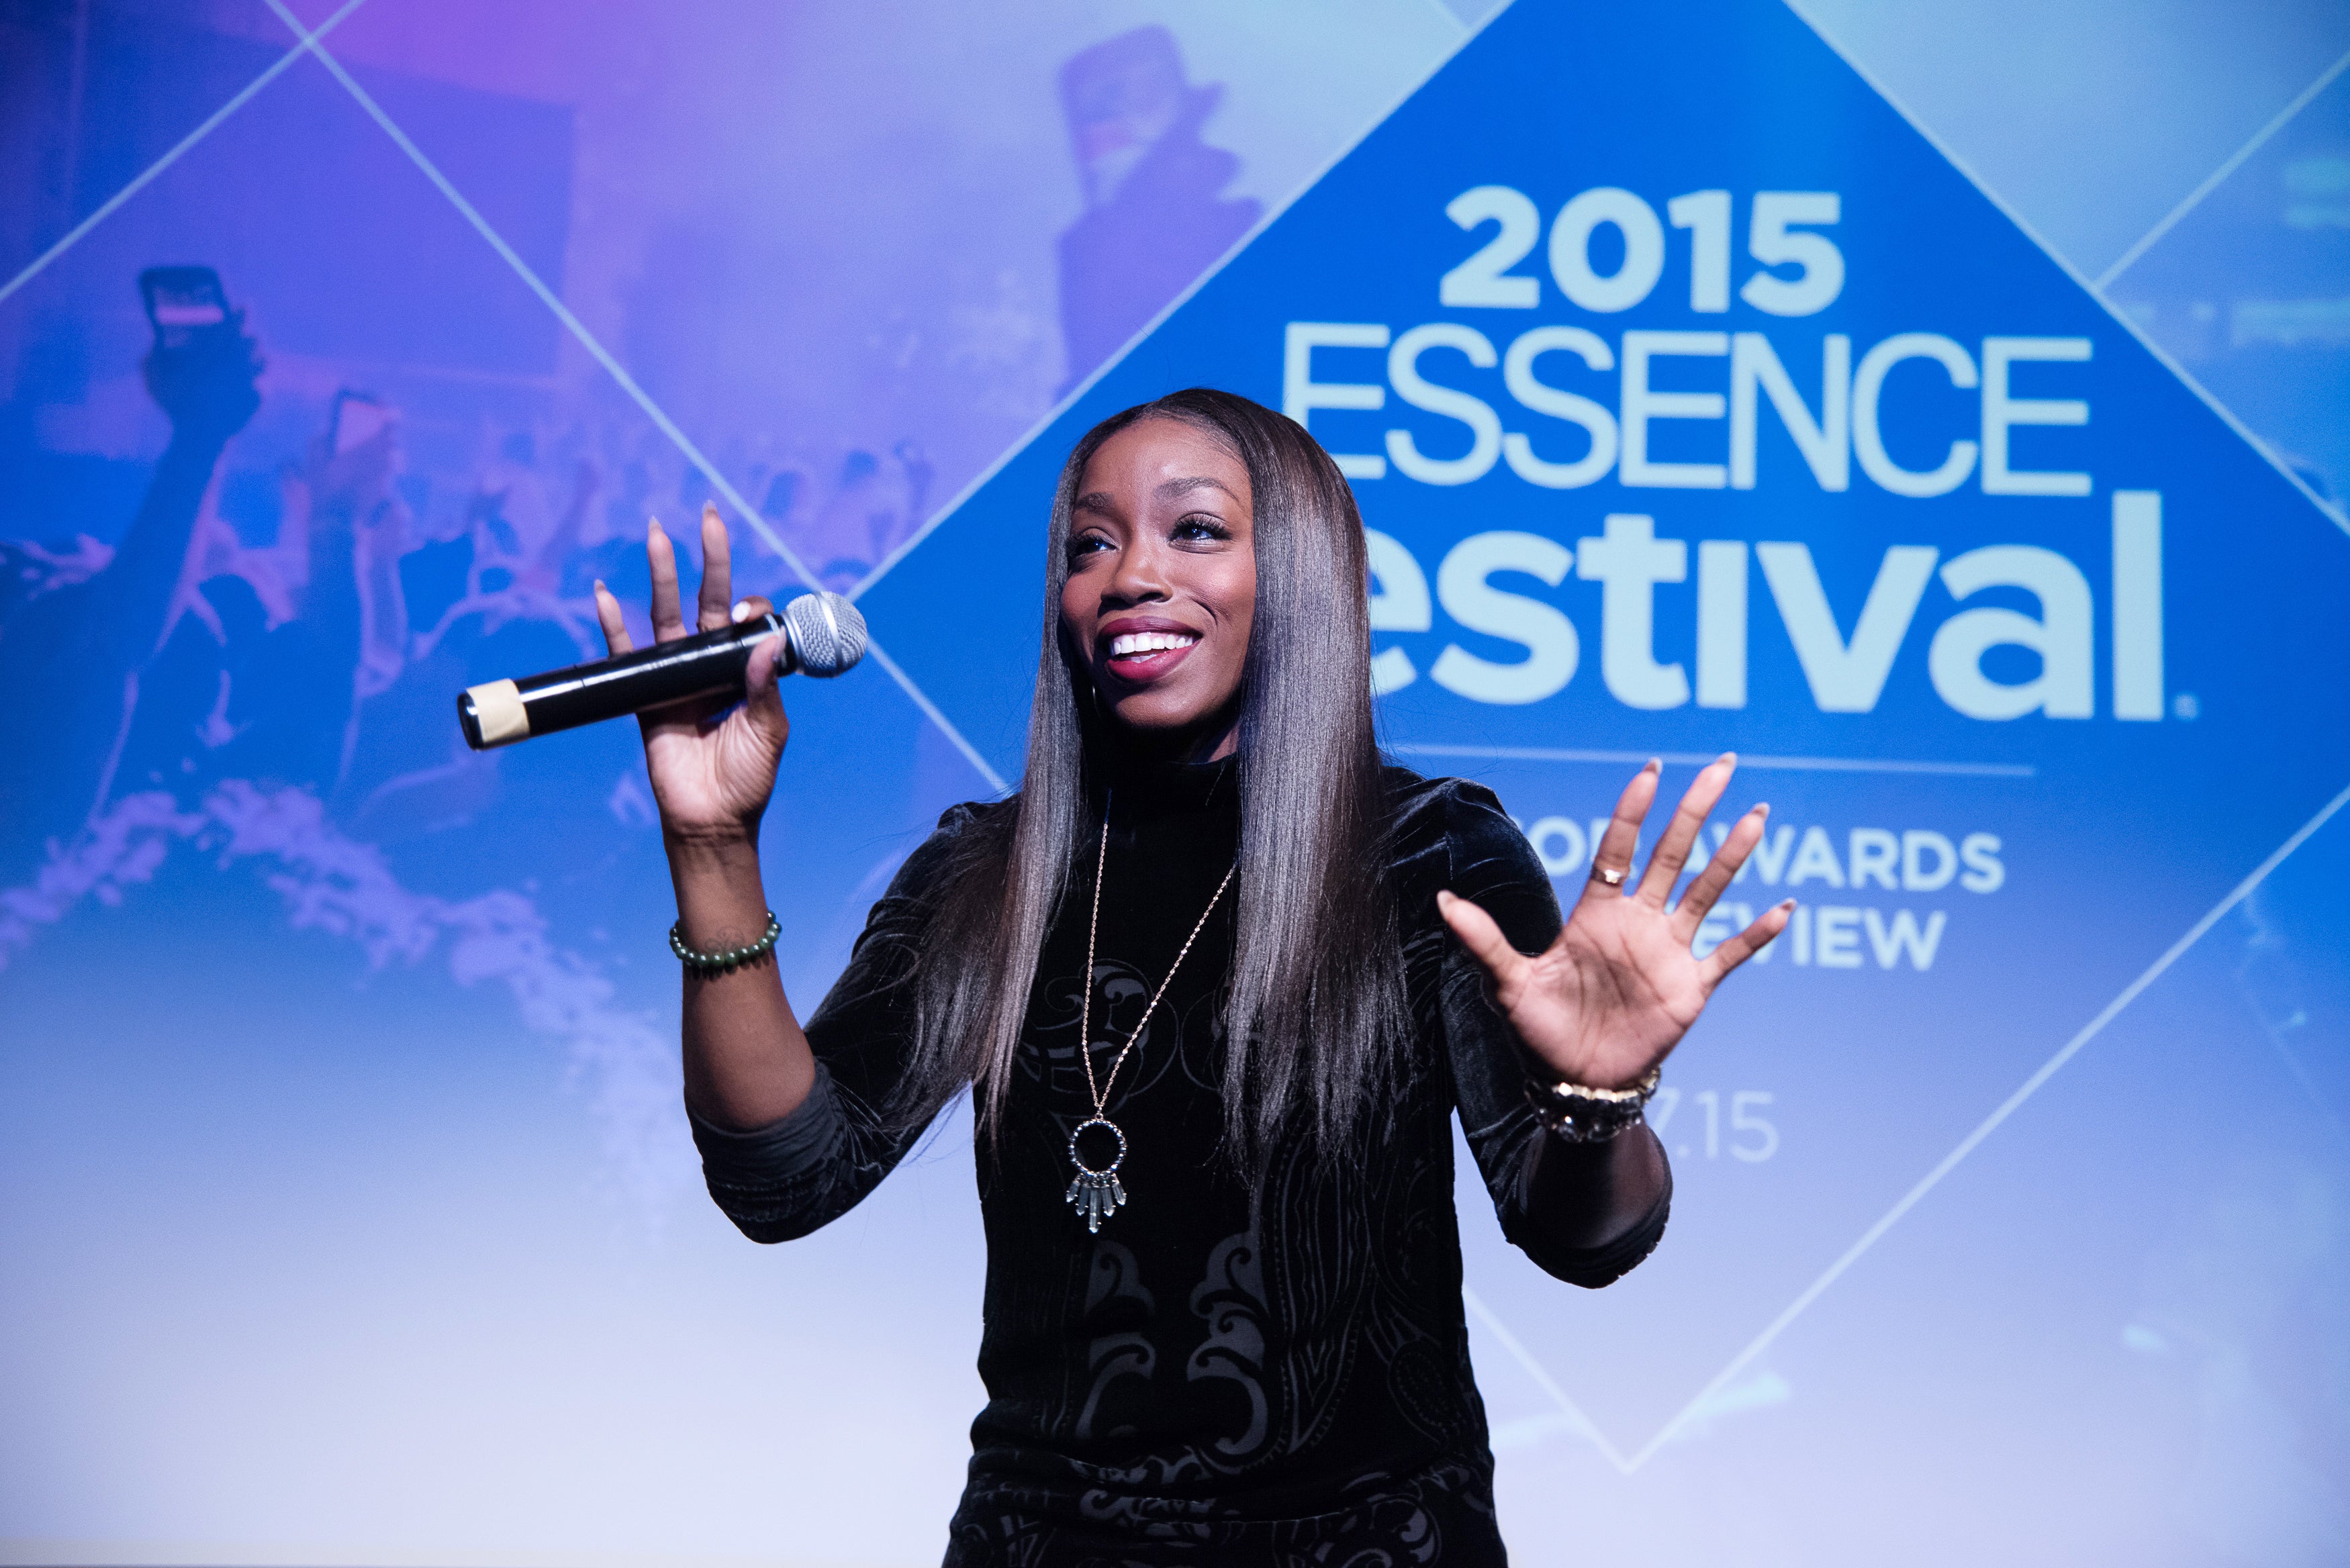 A Look Inside the 2015 ESSENCE Festival Sponsor Awards/2016 Preview